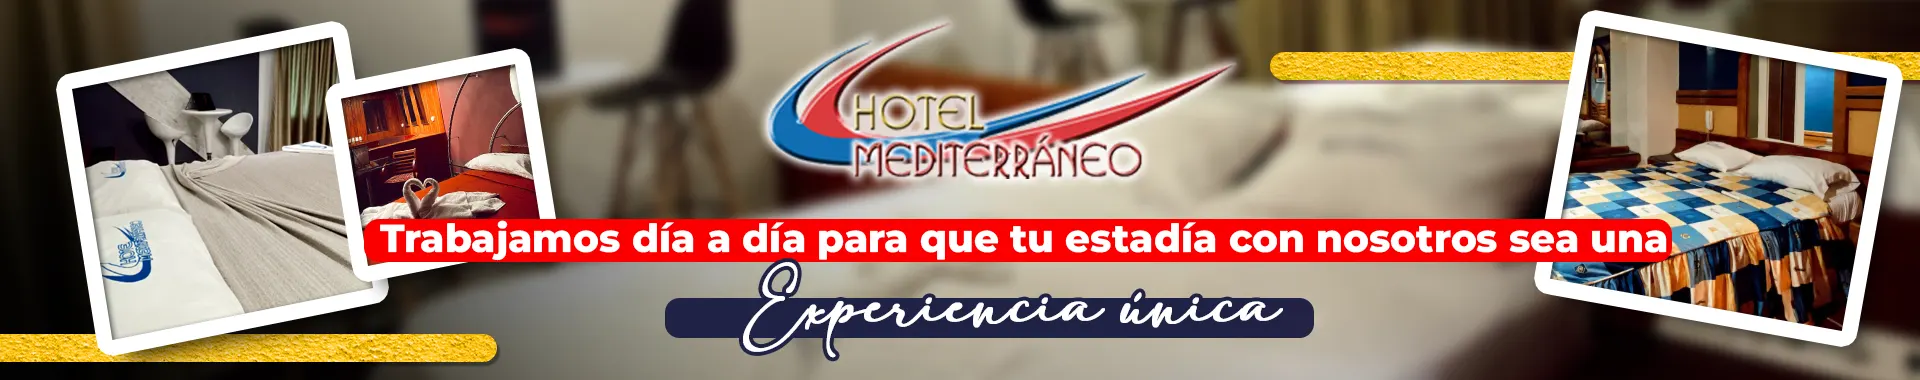 Imagen 4 del perfil de Hotel Mediterráneo